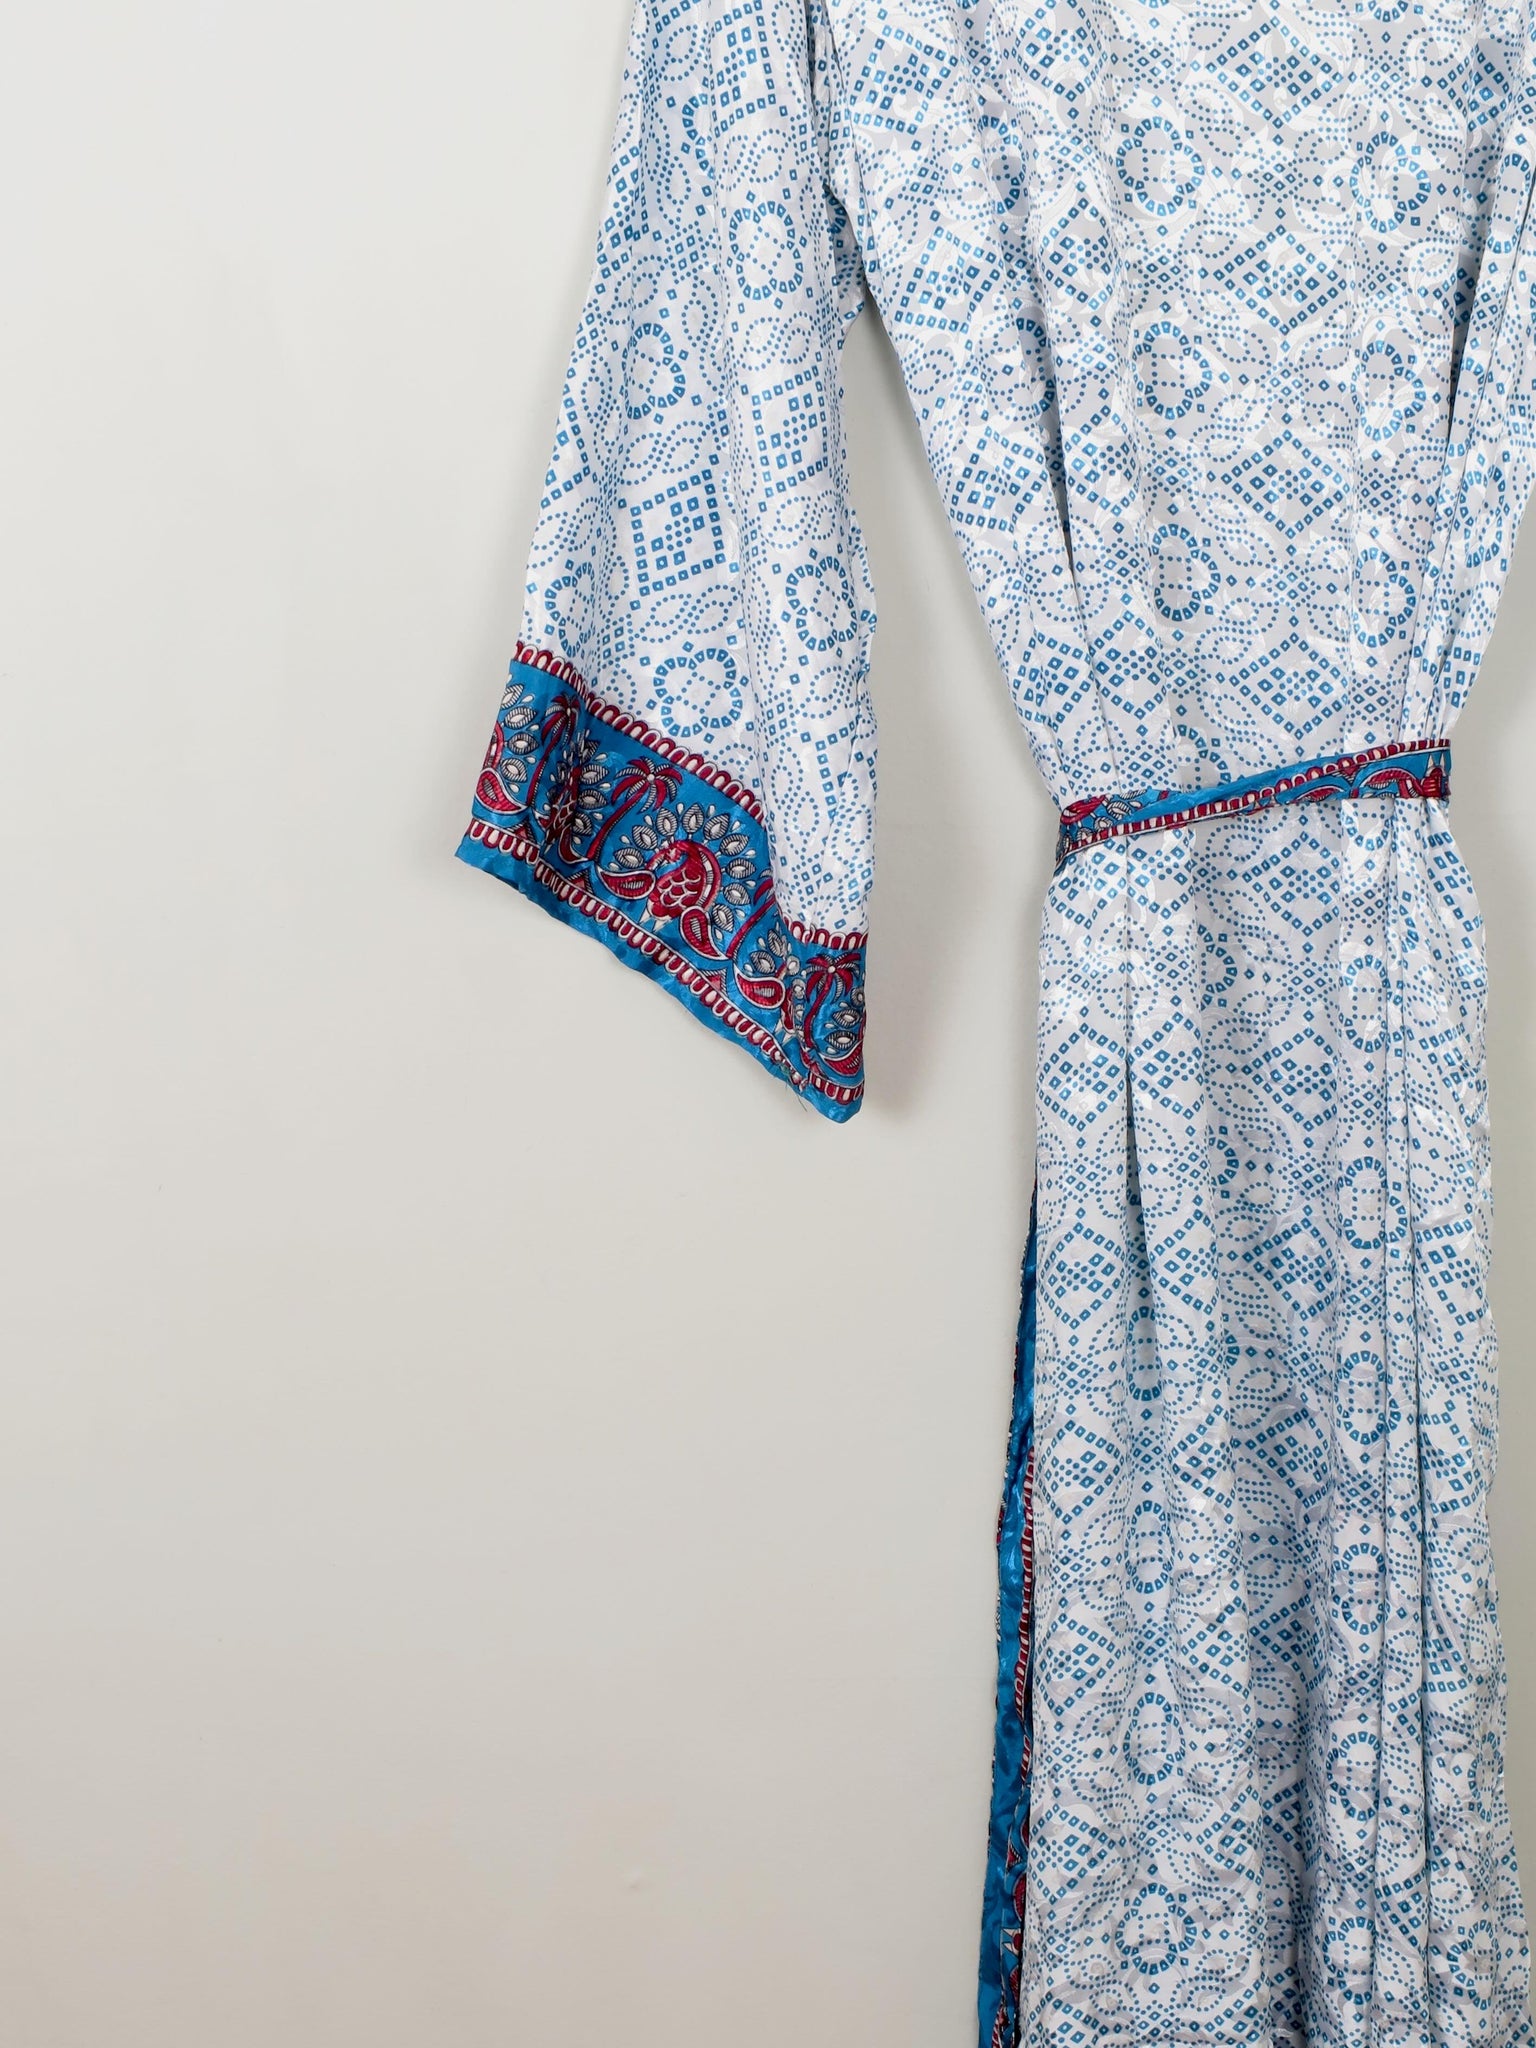 Blue & Wine Printed Silk Kimono S-L - The Harlequin